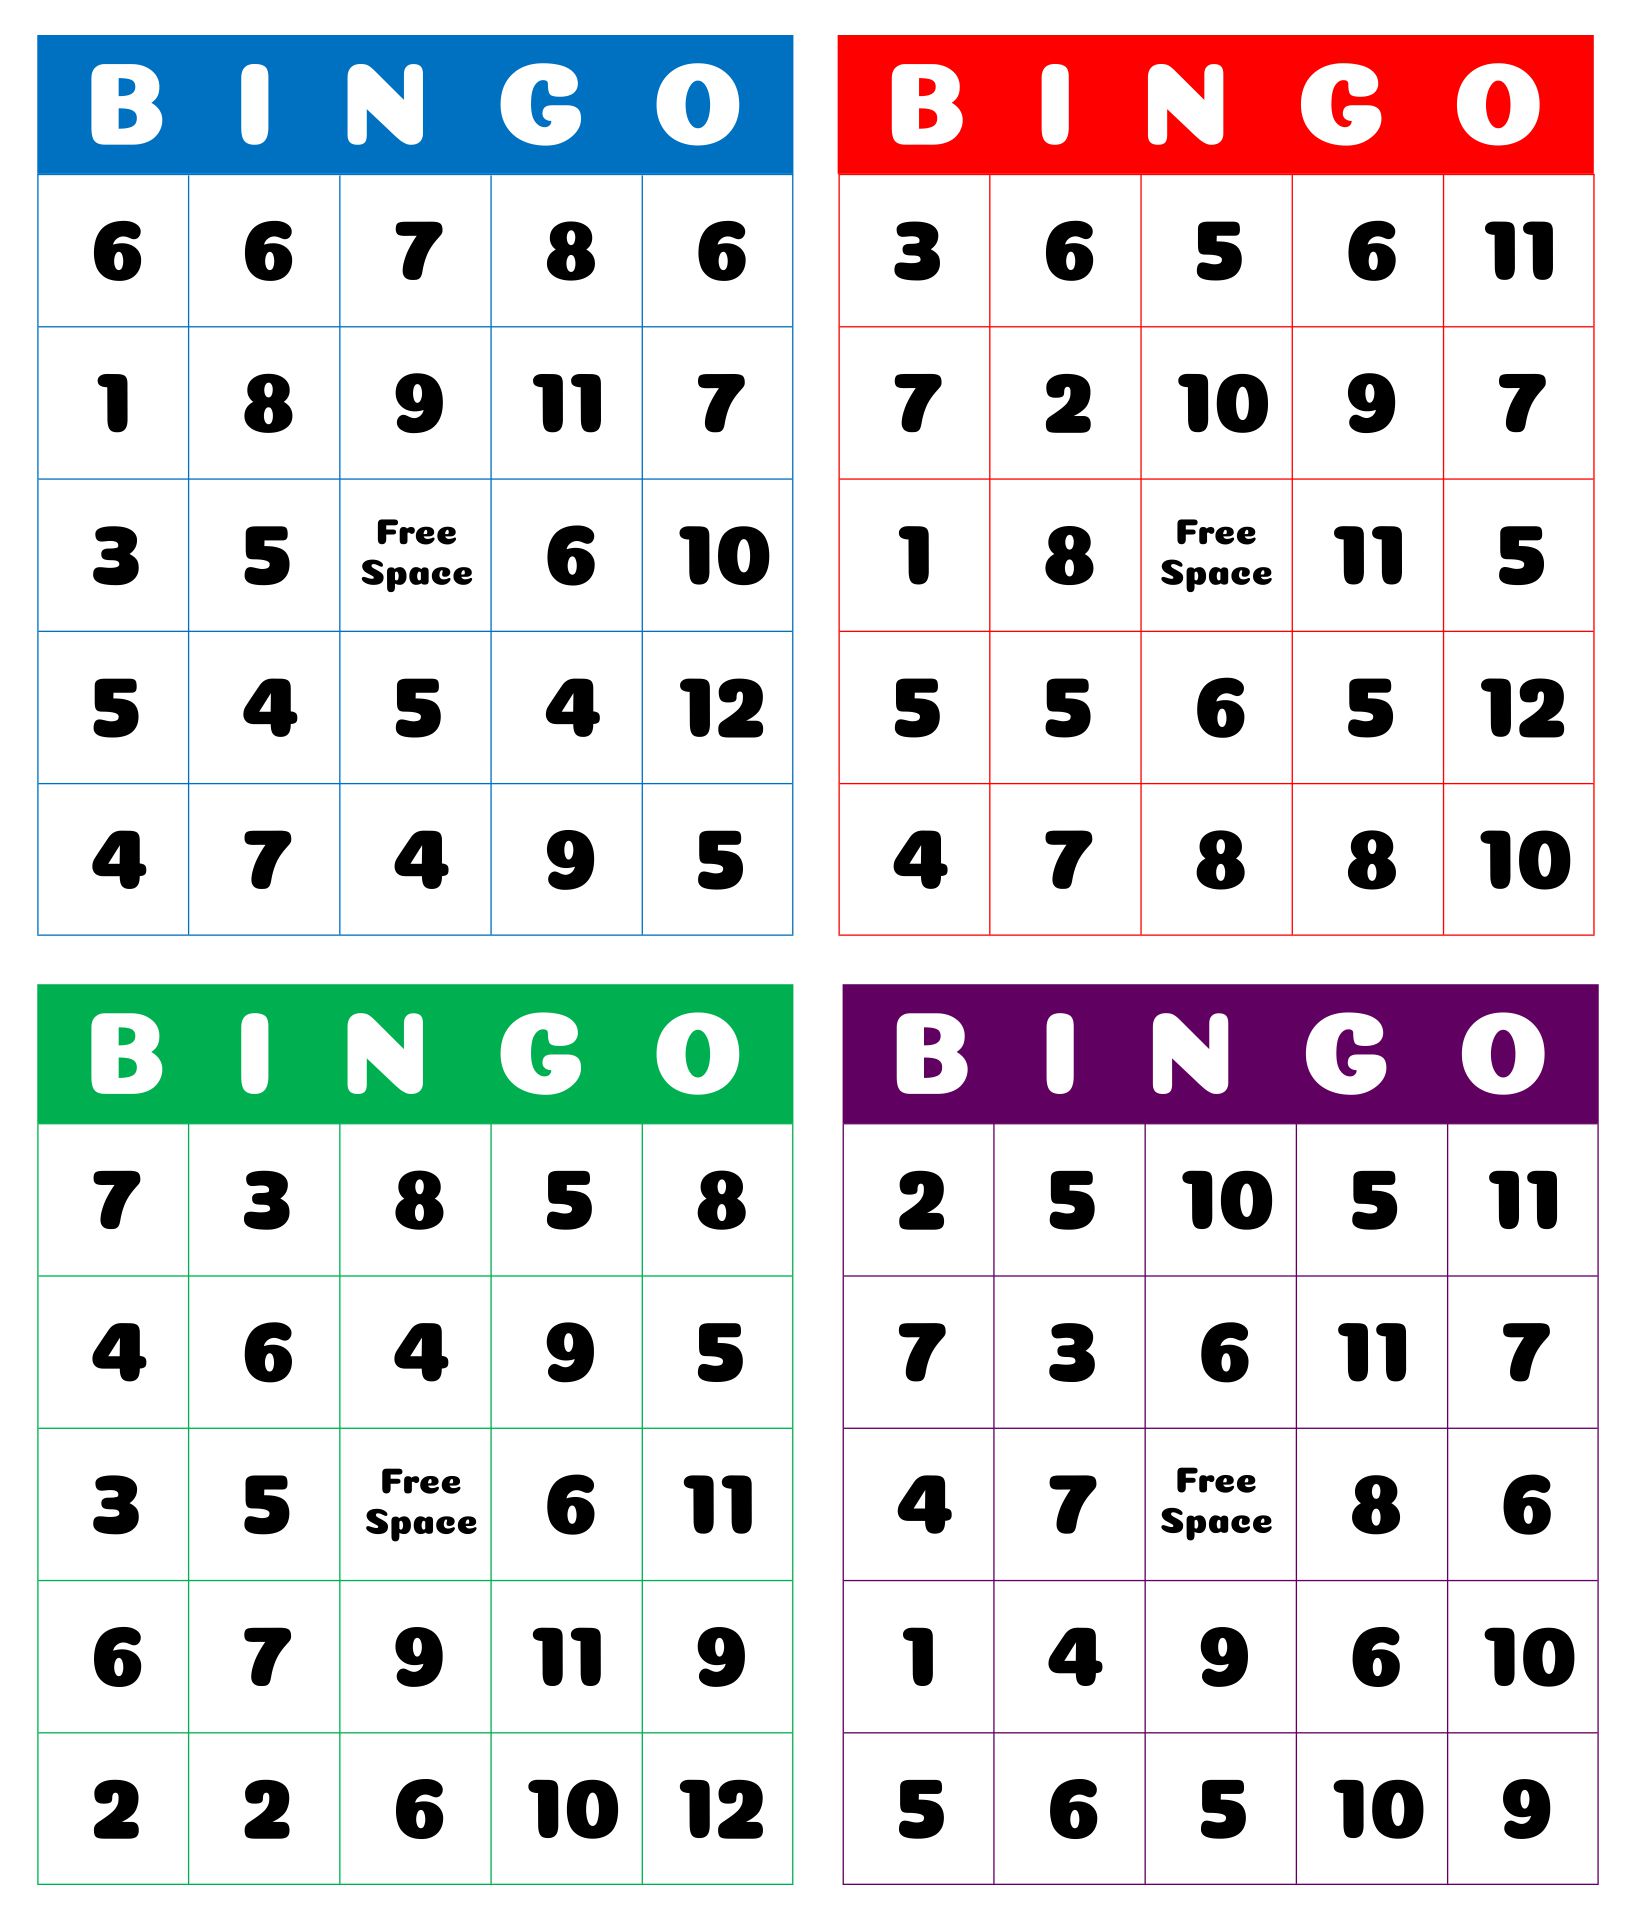 number-bingo-printable